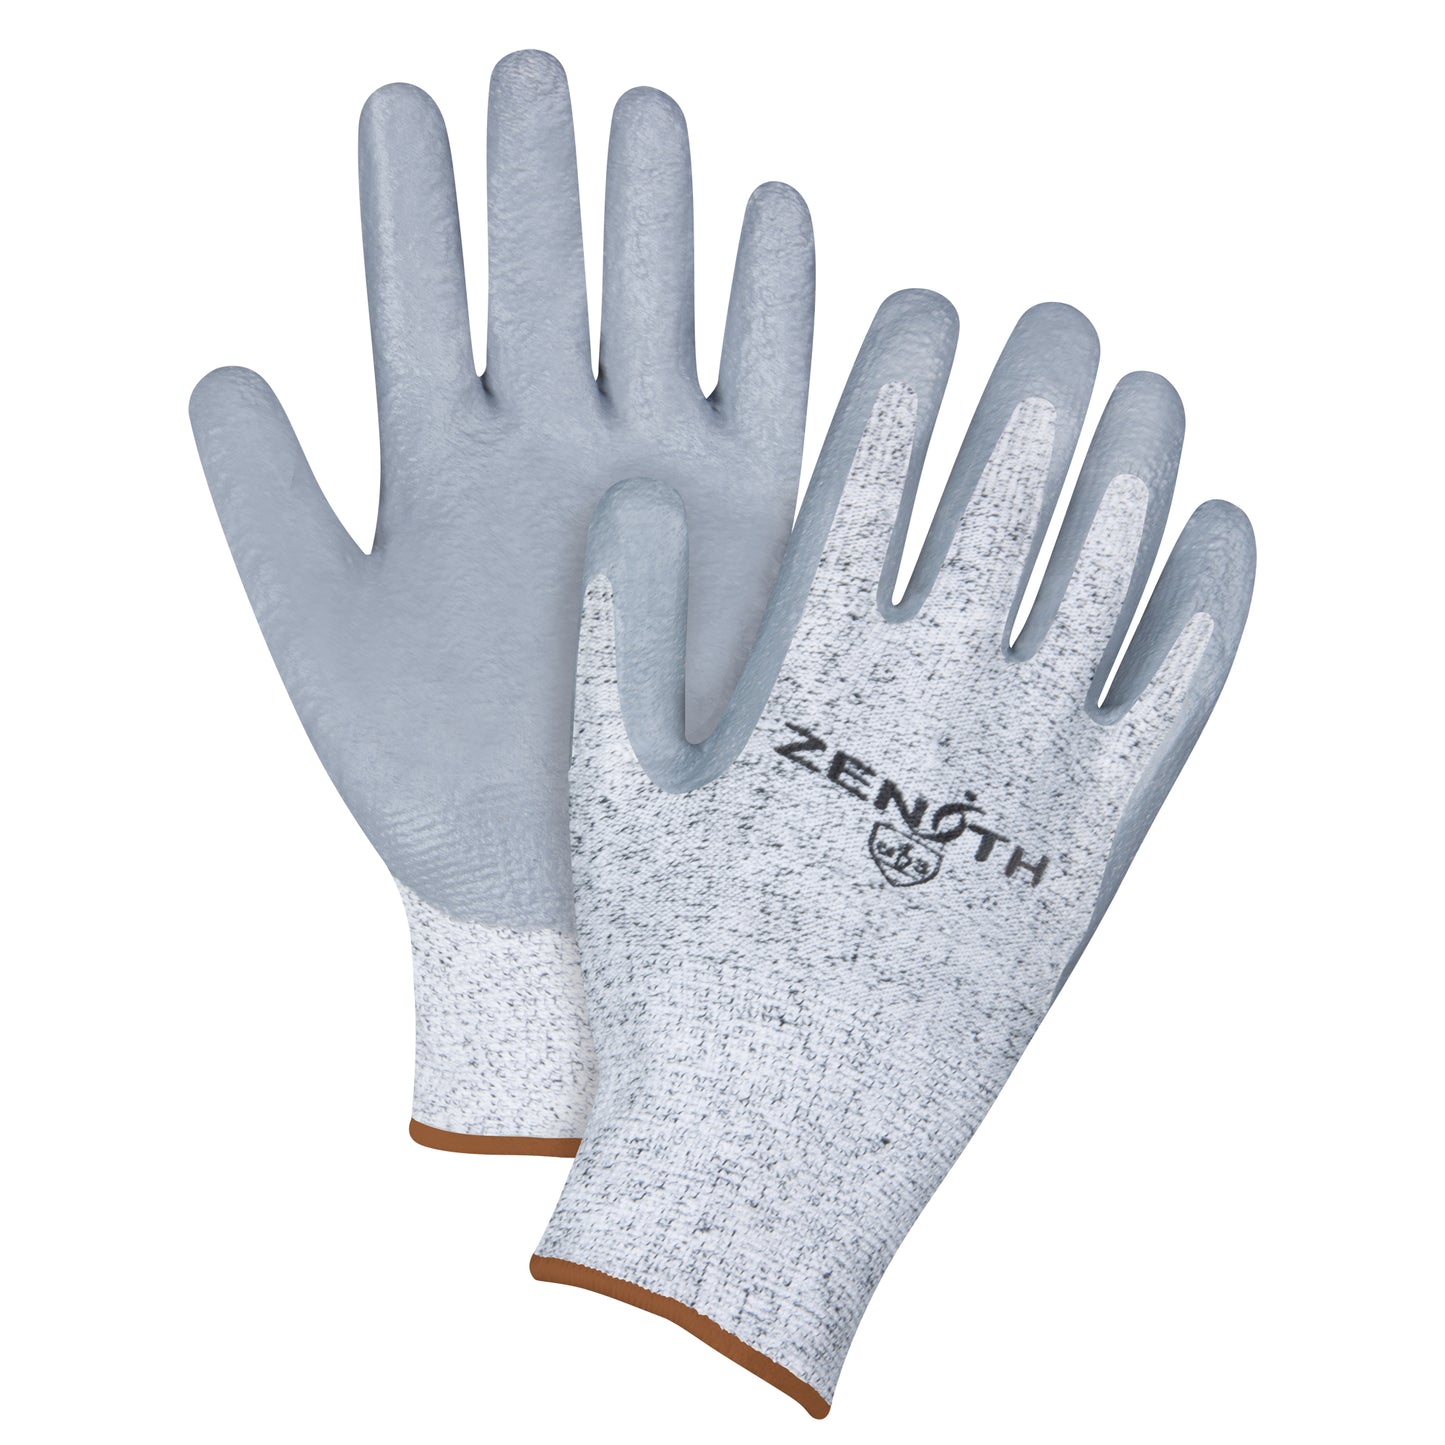 Coated Gloves, Nitrile Coated, HPPE Shell